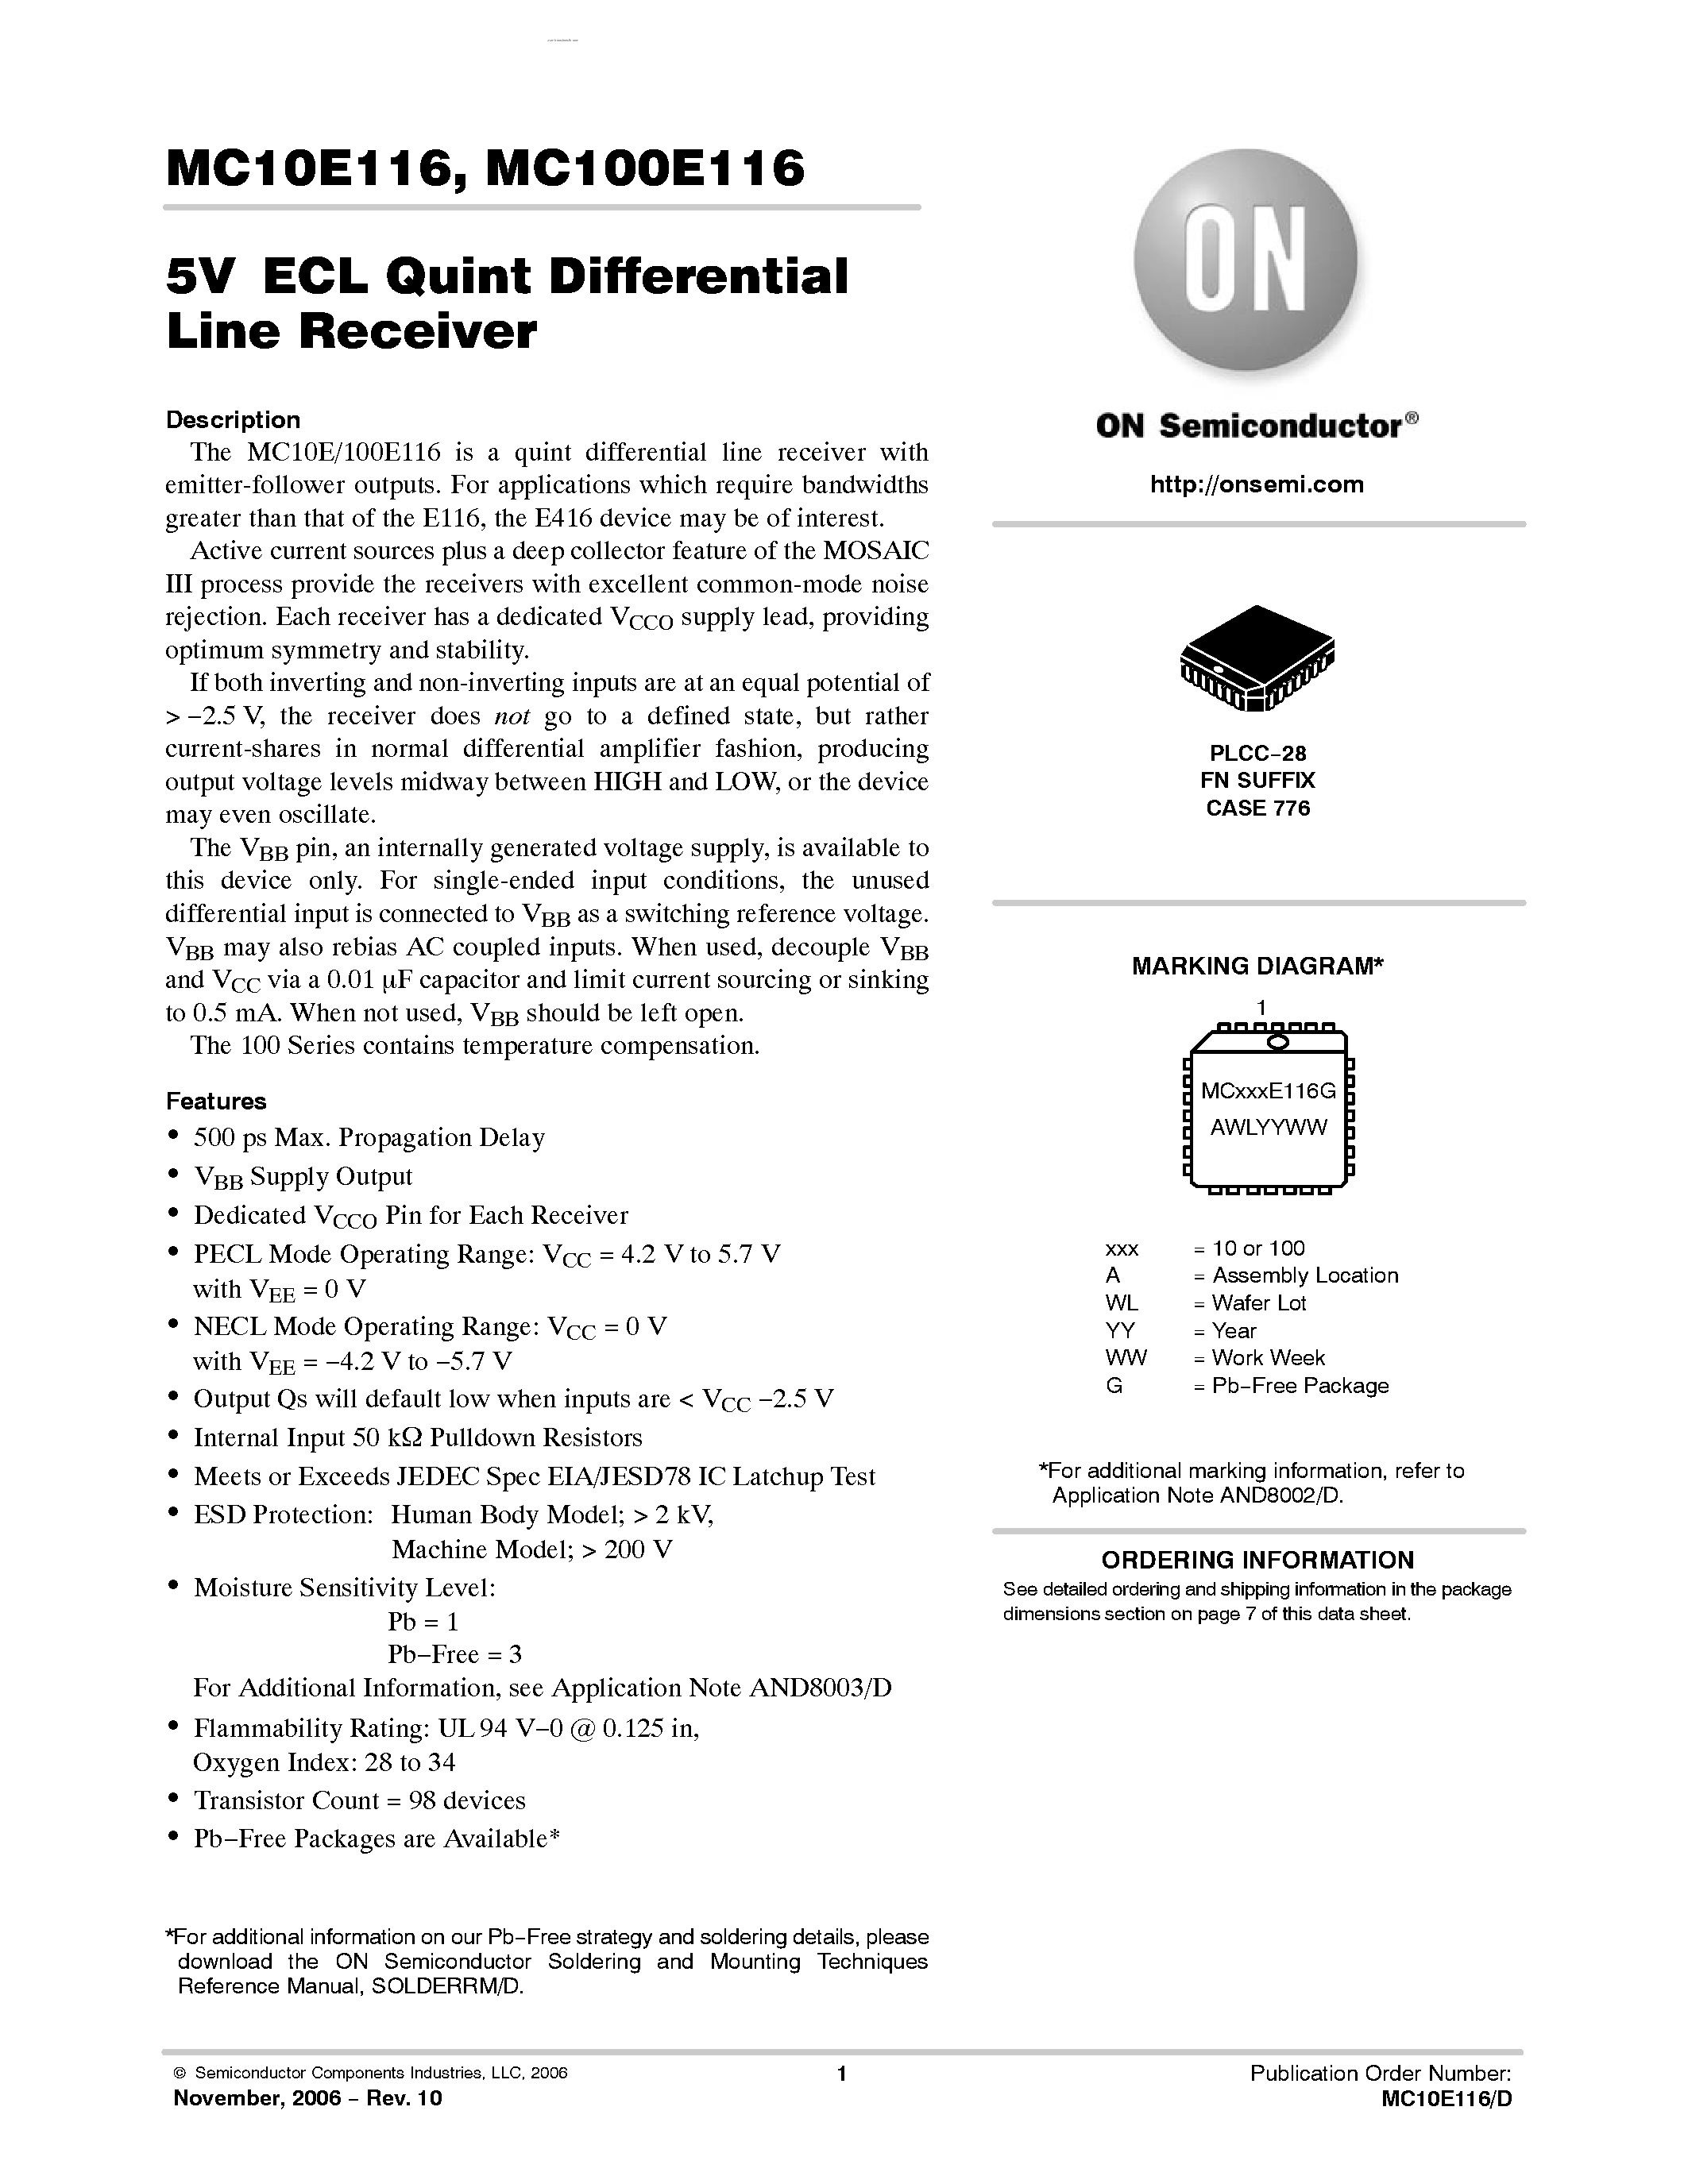 Datasheet MC100E116 - QUINT DIFFERENTIAL LINE RECEIVER page 1